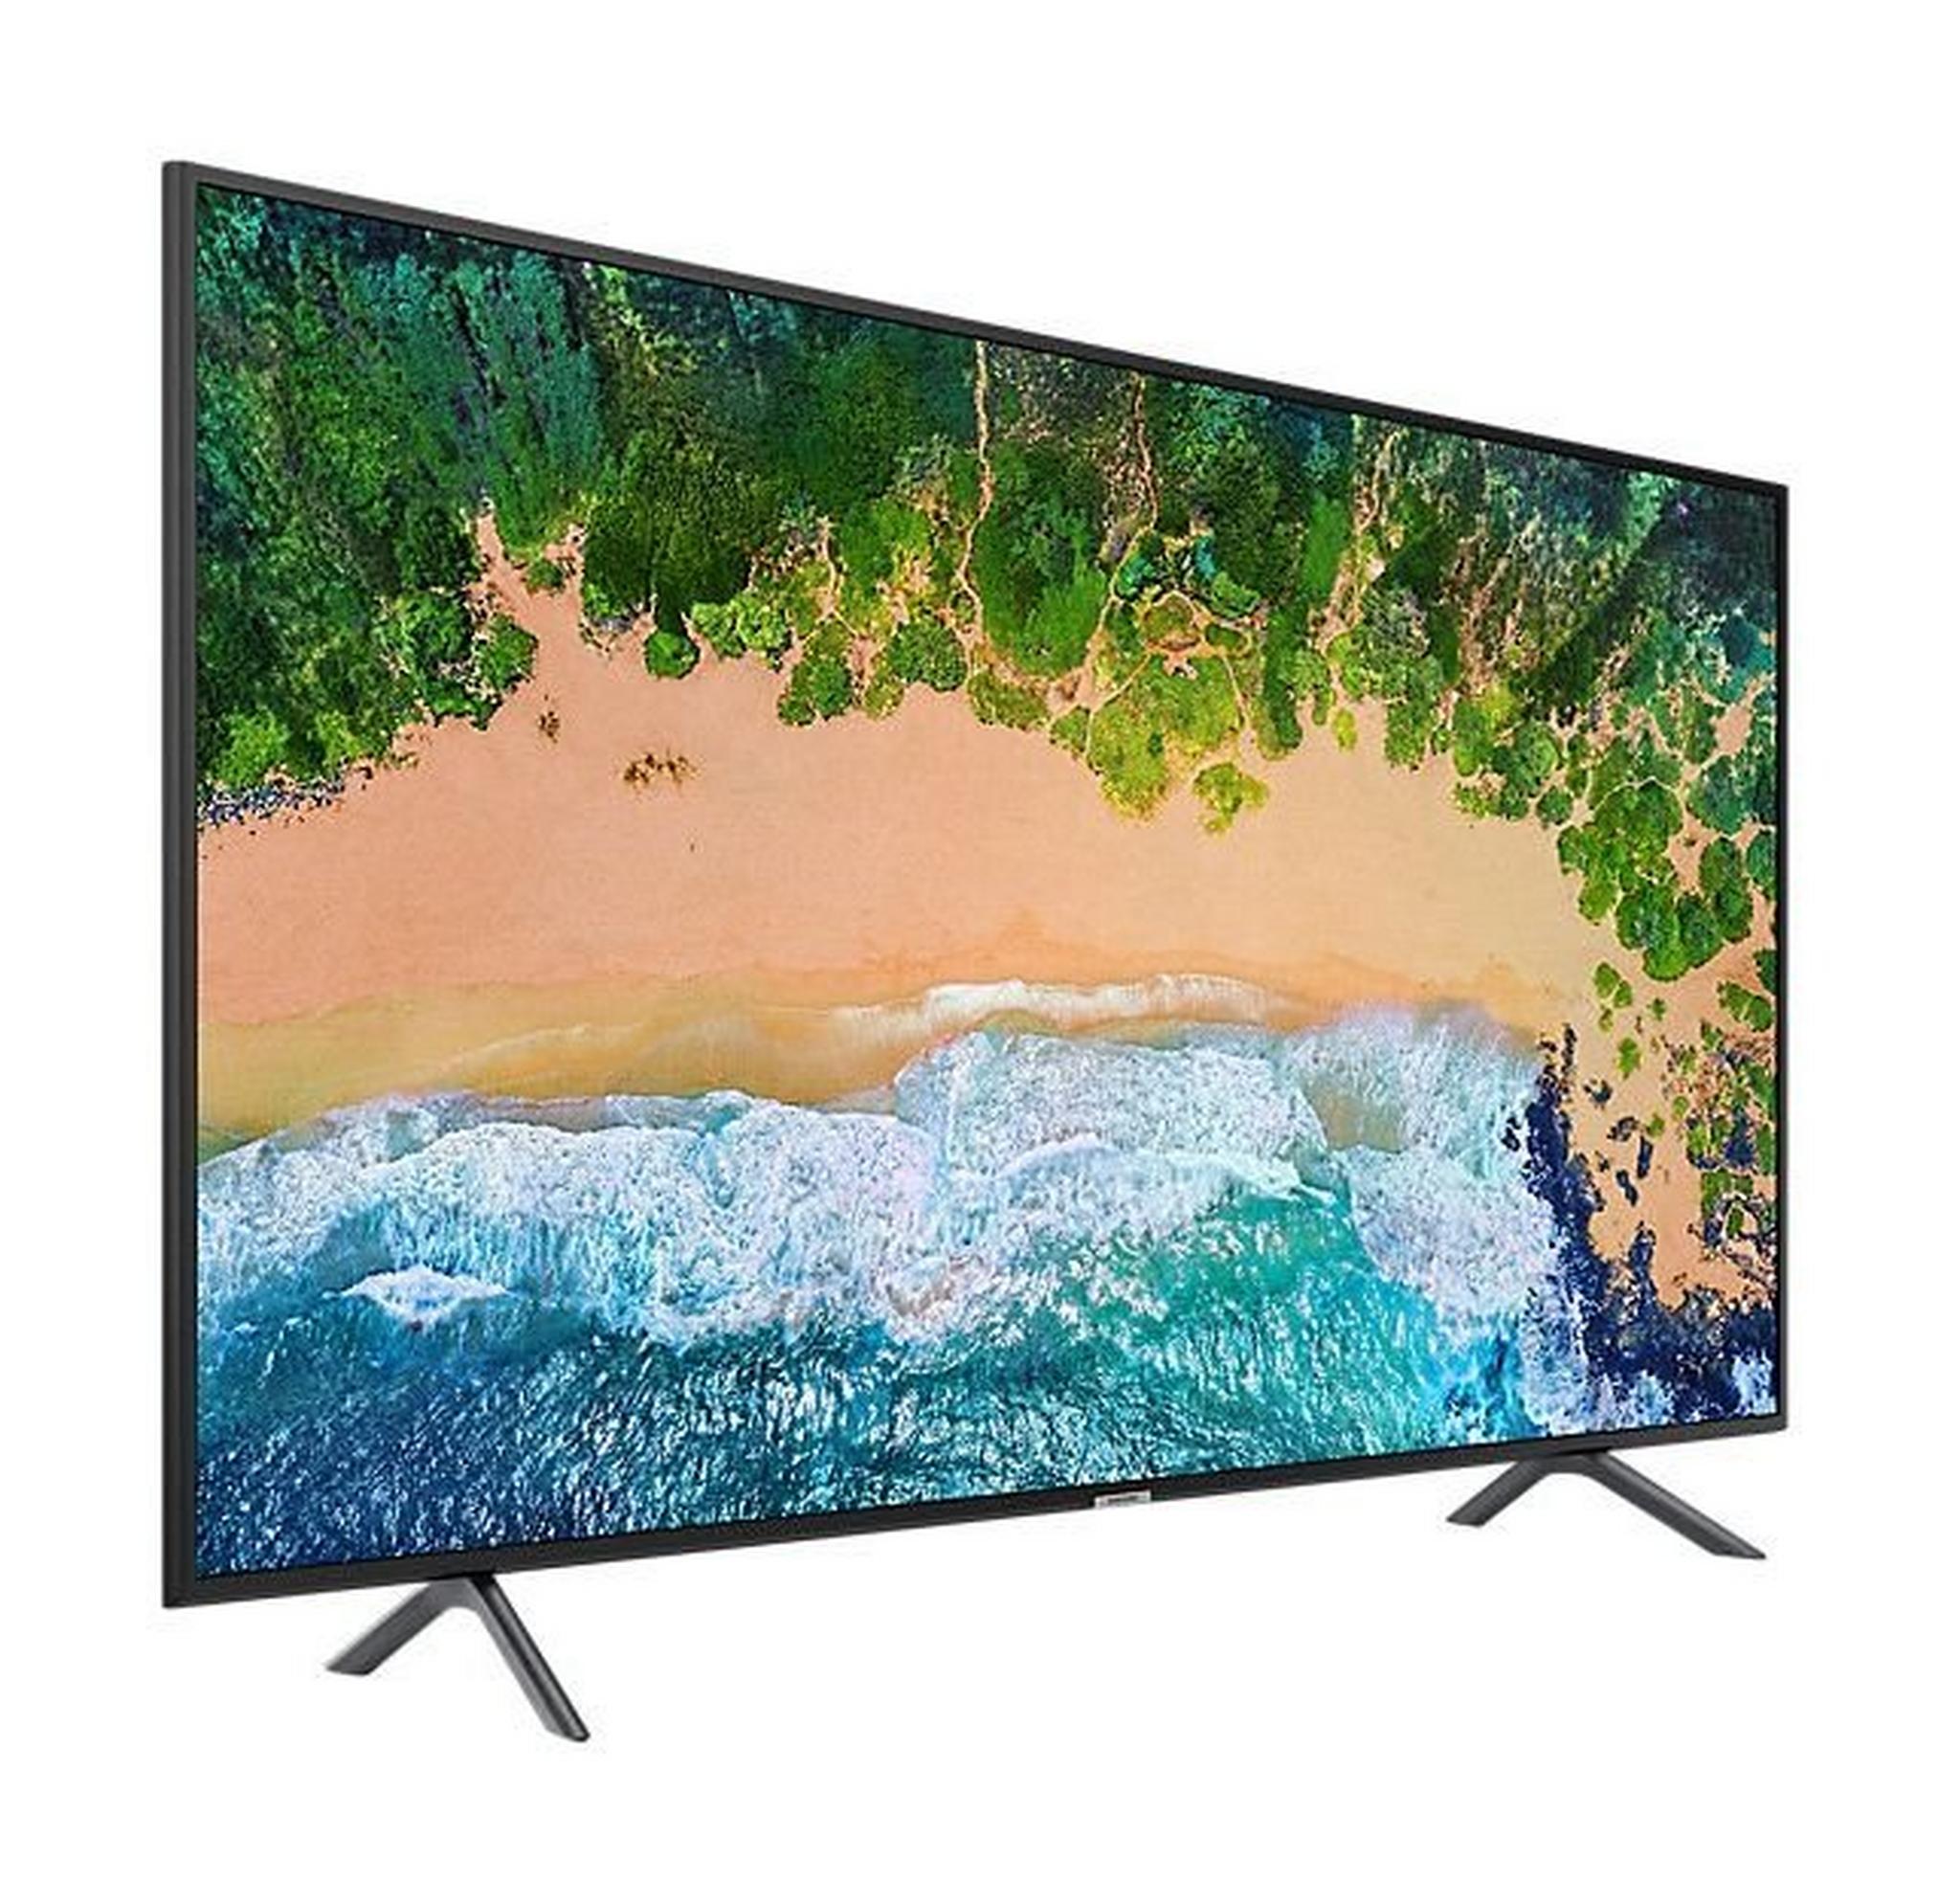 Samsung 55 inch 4K Ultra HD Smart LED TV - UA55NU7100